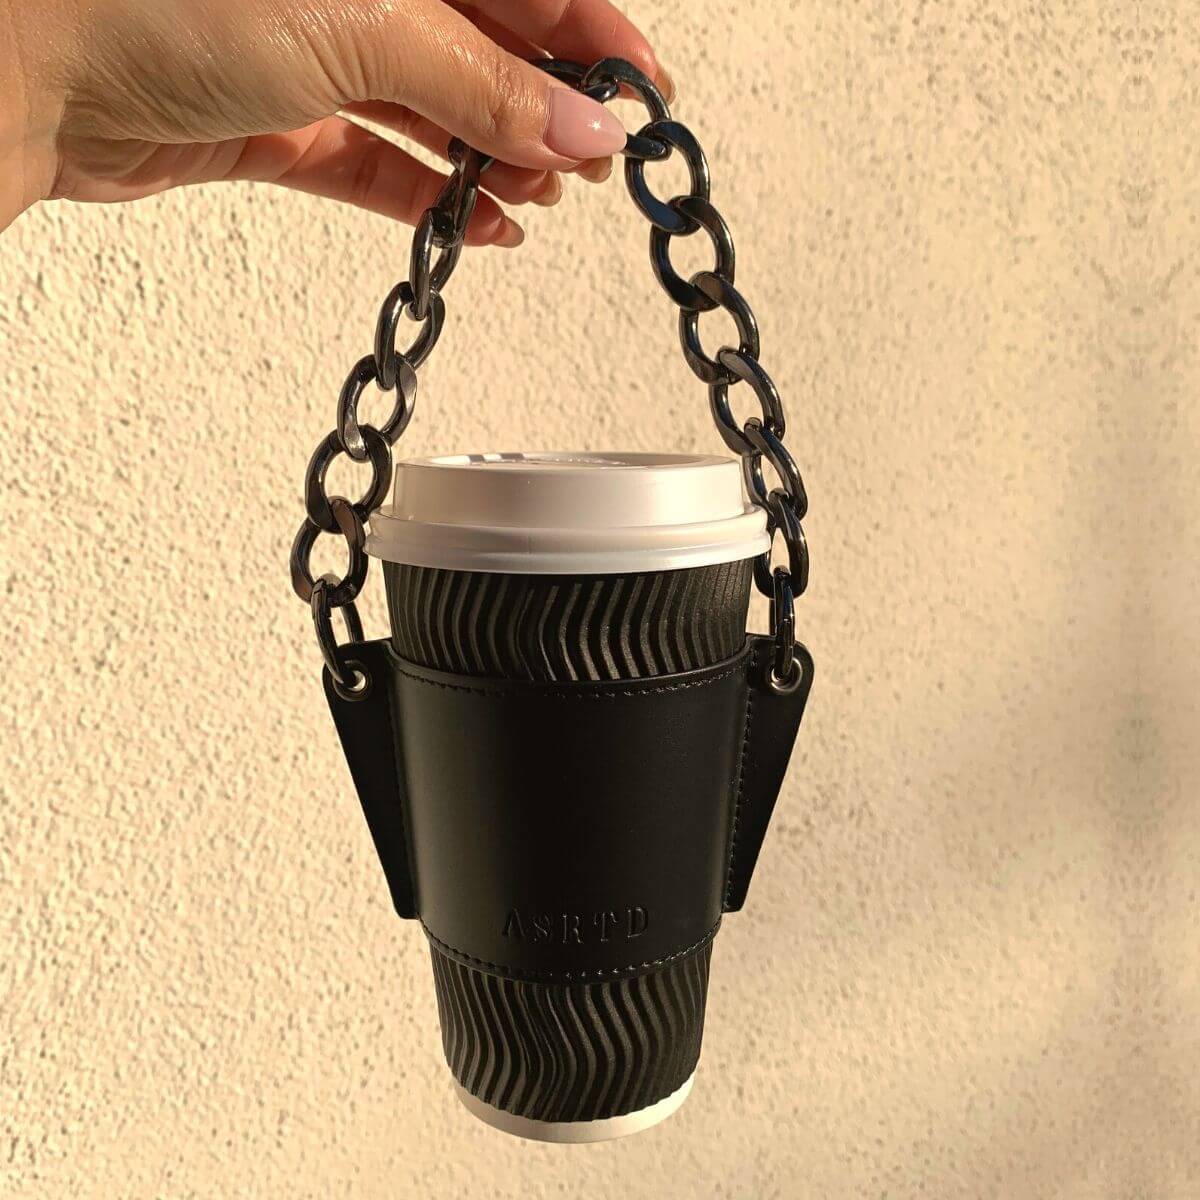 Reusable Coffee Tea Drink Cup Sleeve